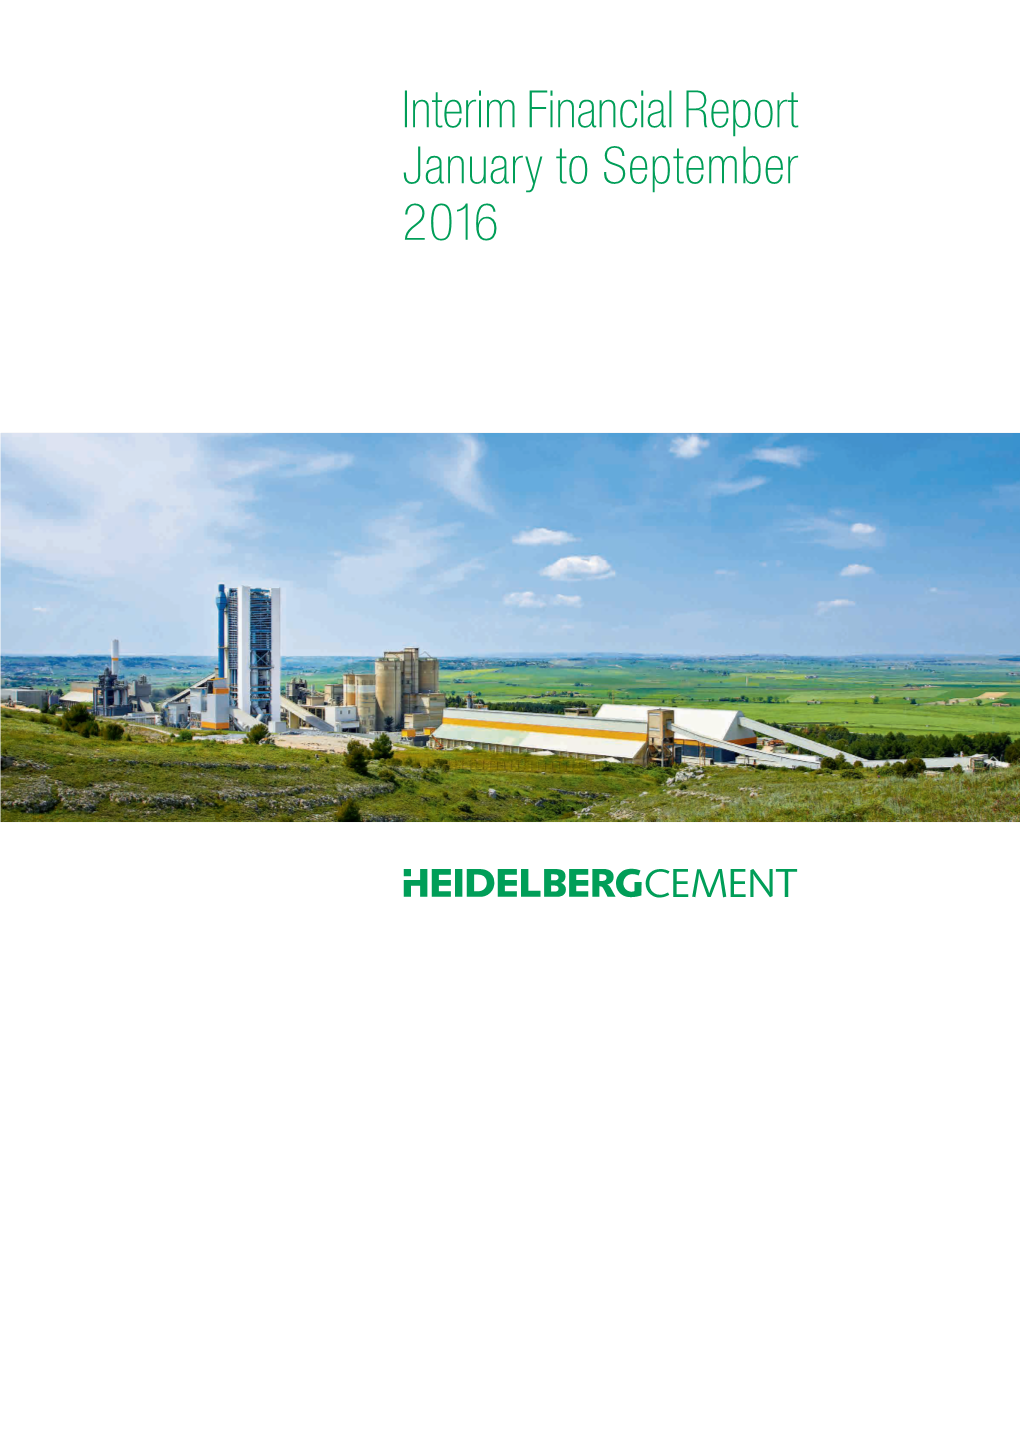 Heidelbergcement Interim Financial Report January to September 2016